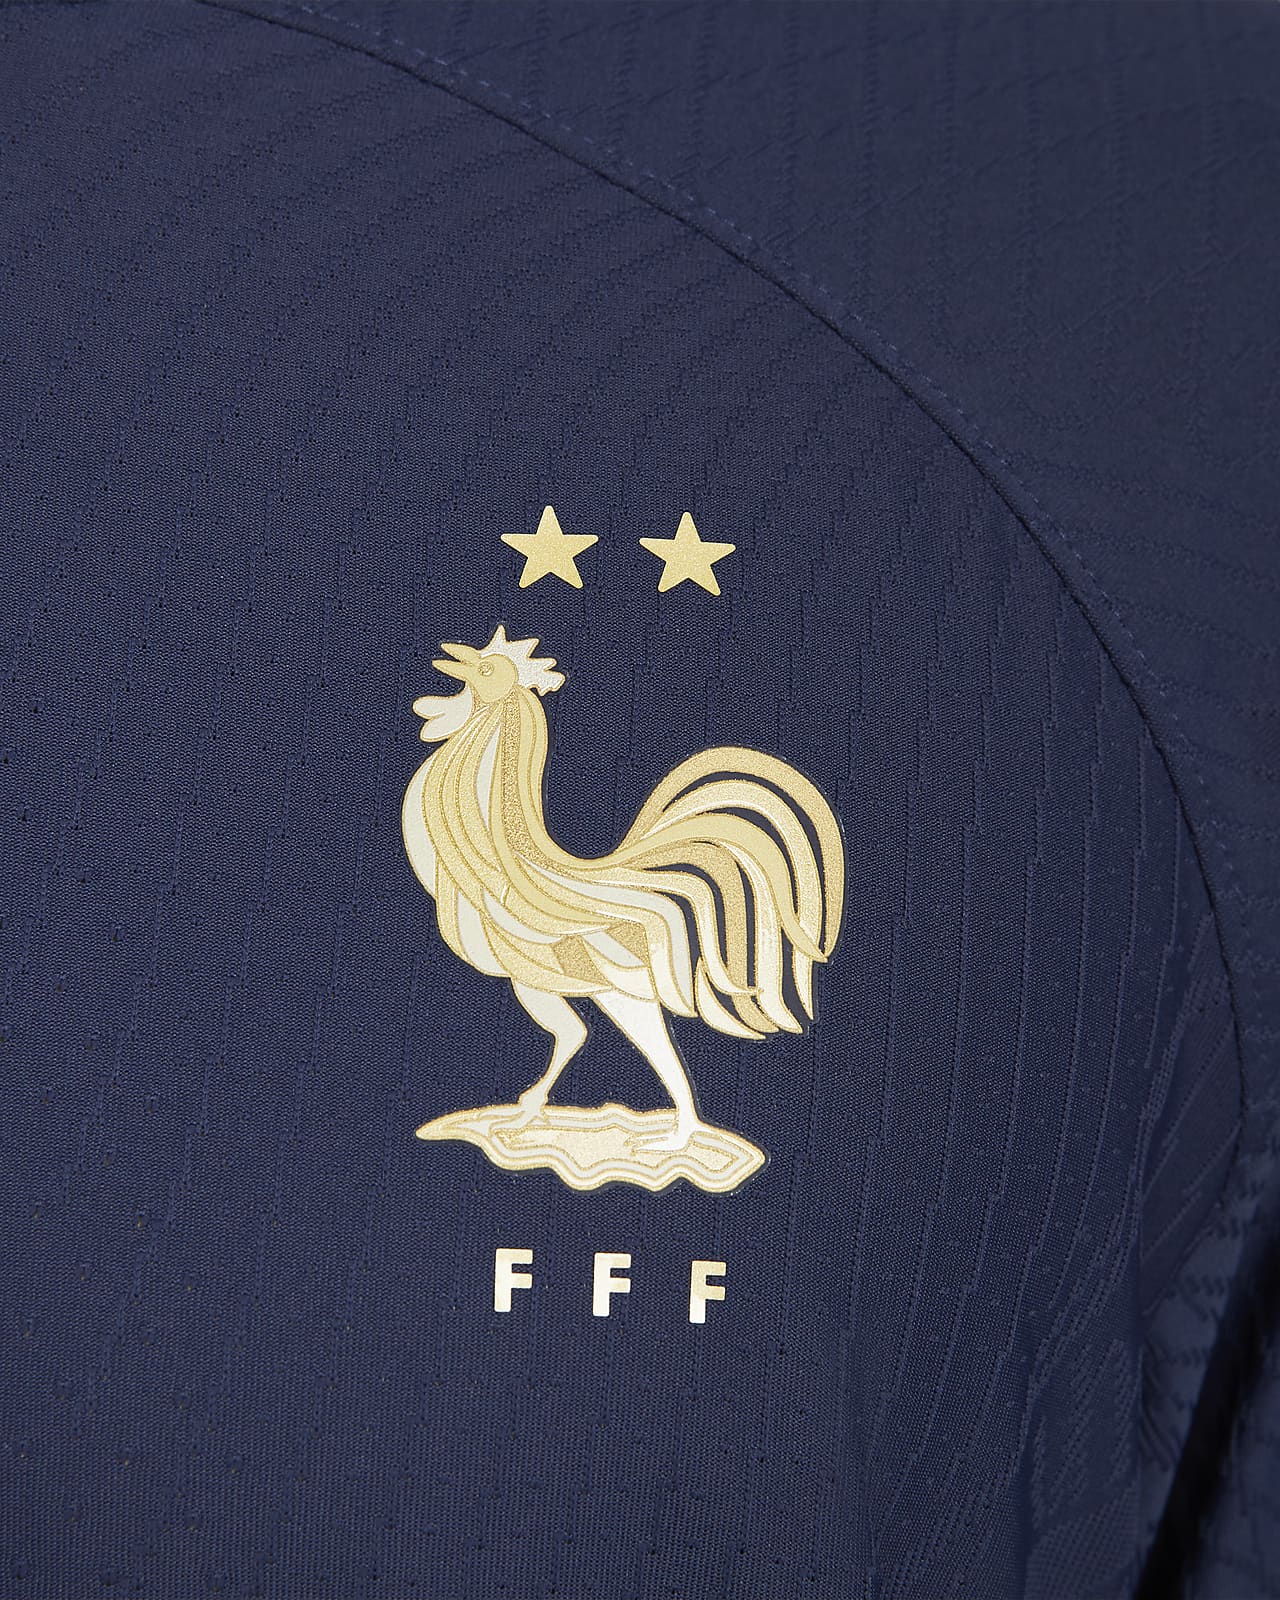 Logo Foot Equipe de France Azyme